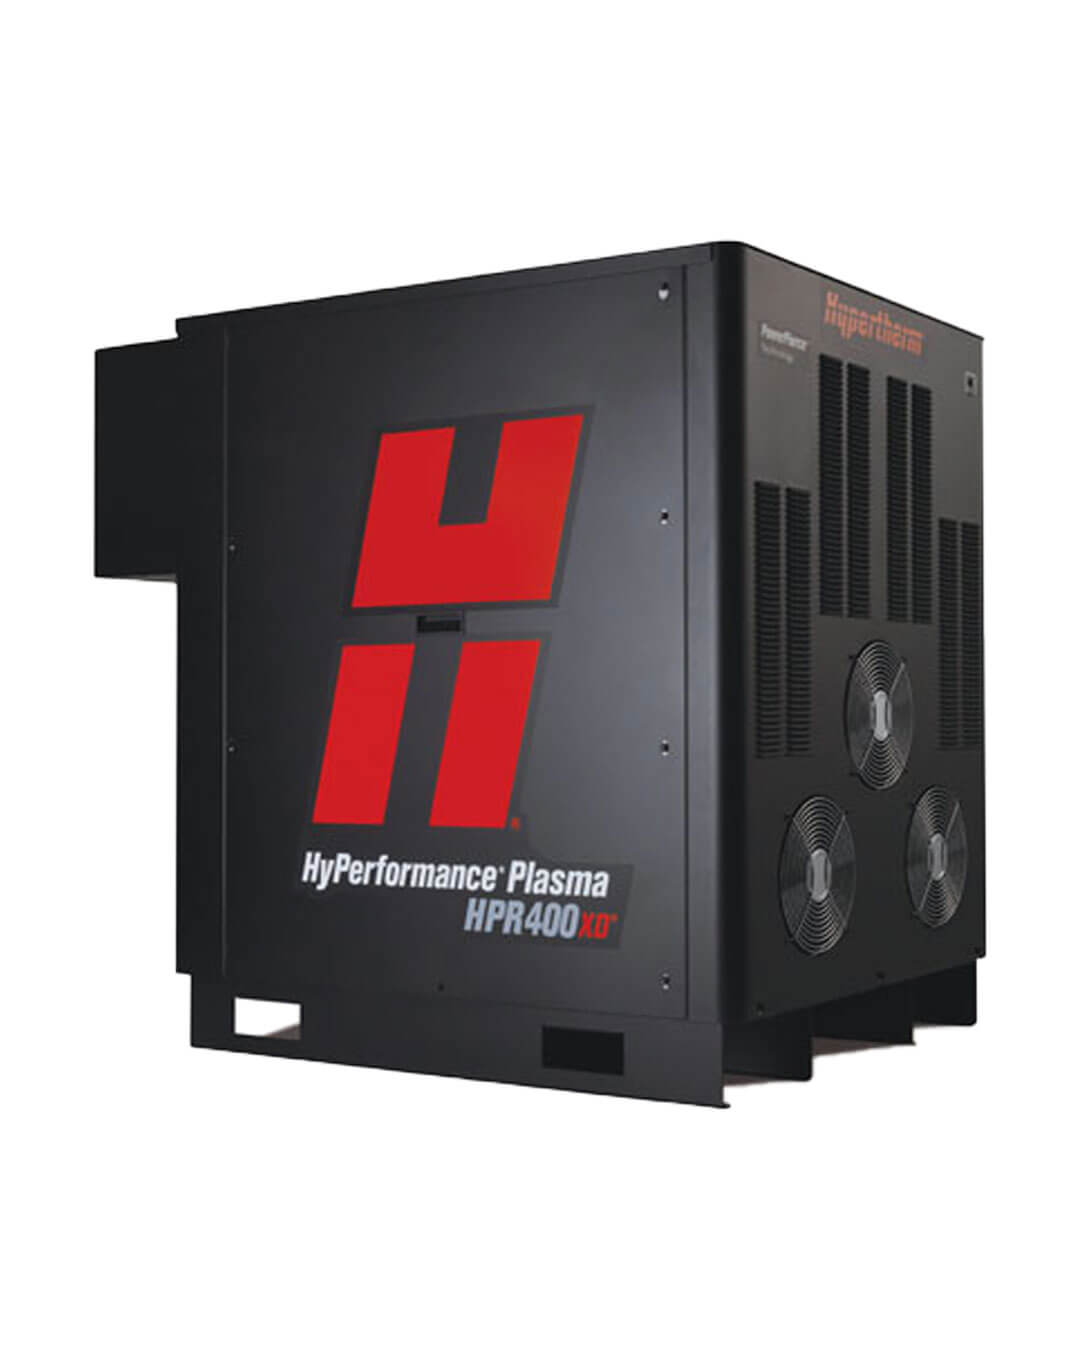 HPR400XD-power-supply